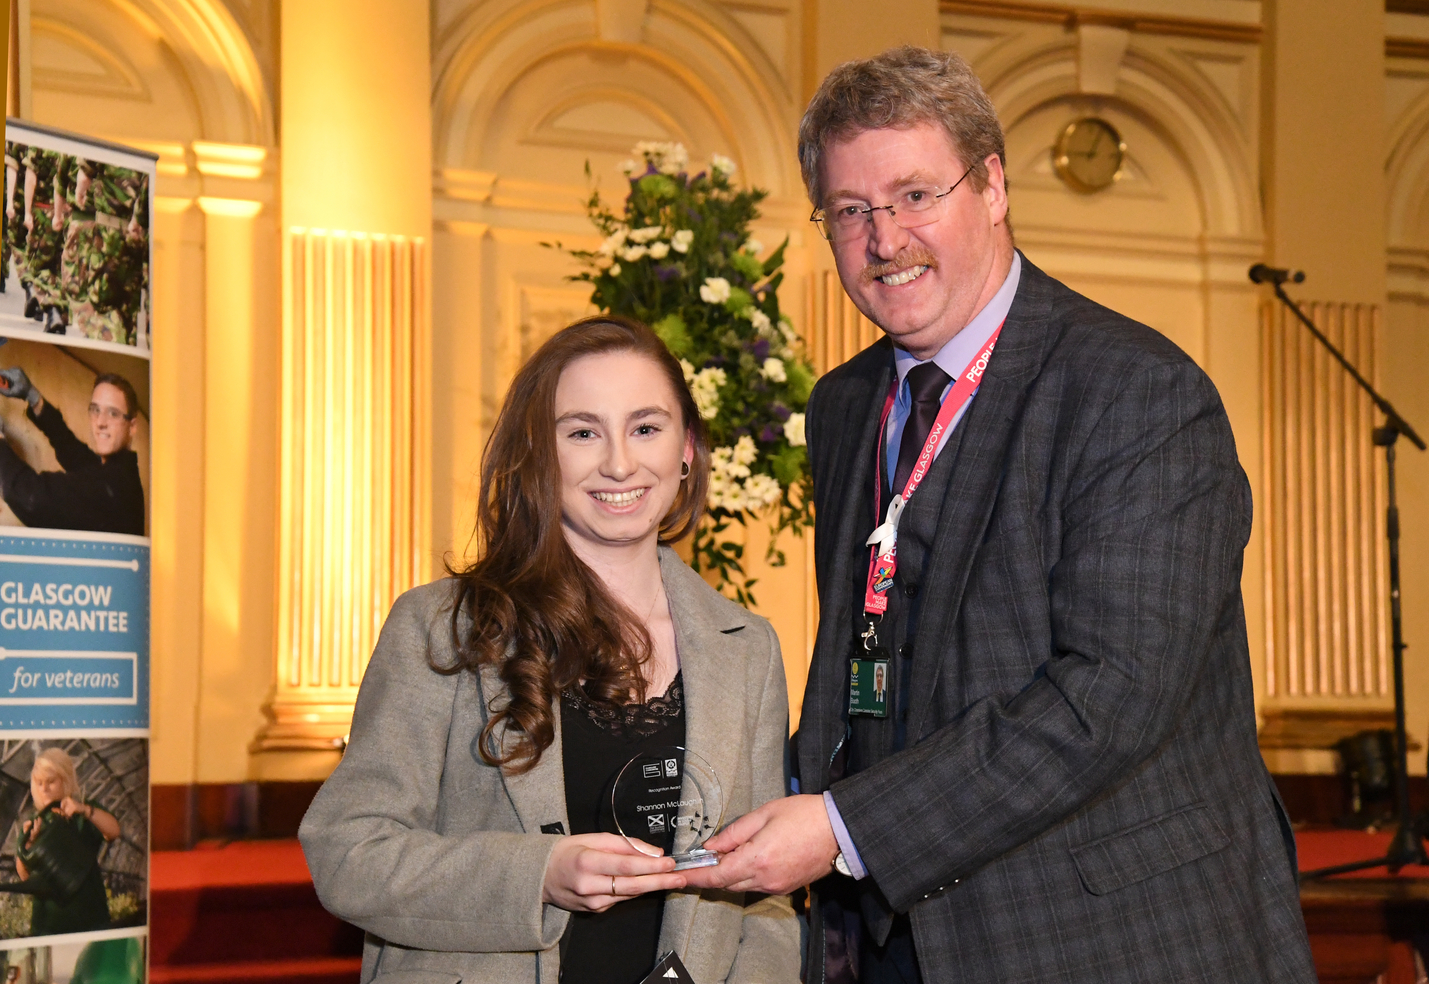 McDermott Group trainee receives Glasgow Guarantee award